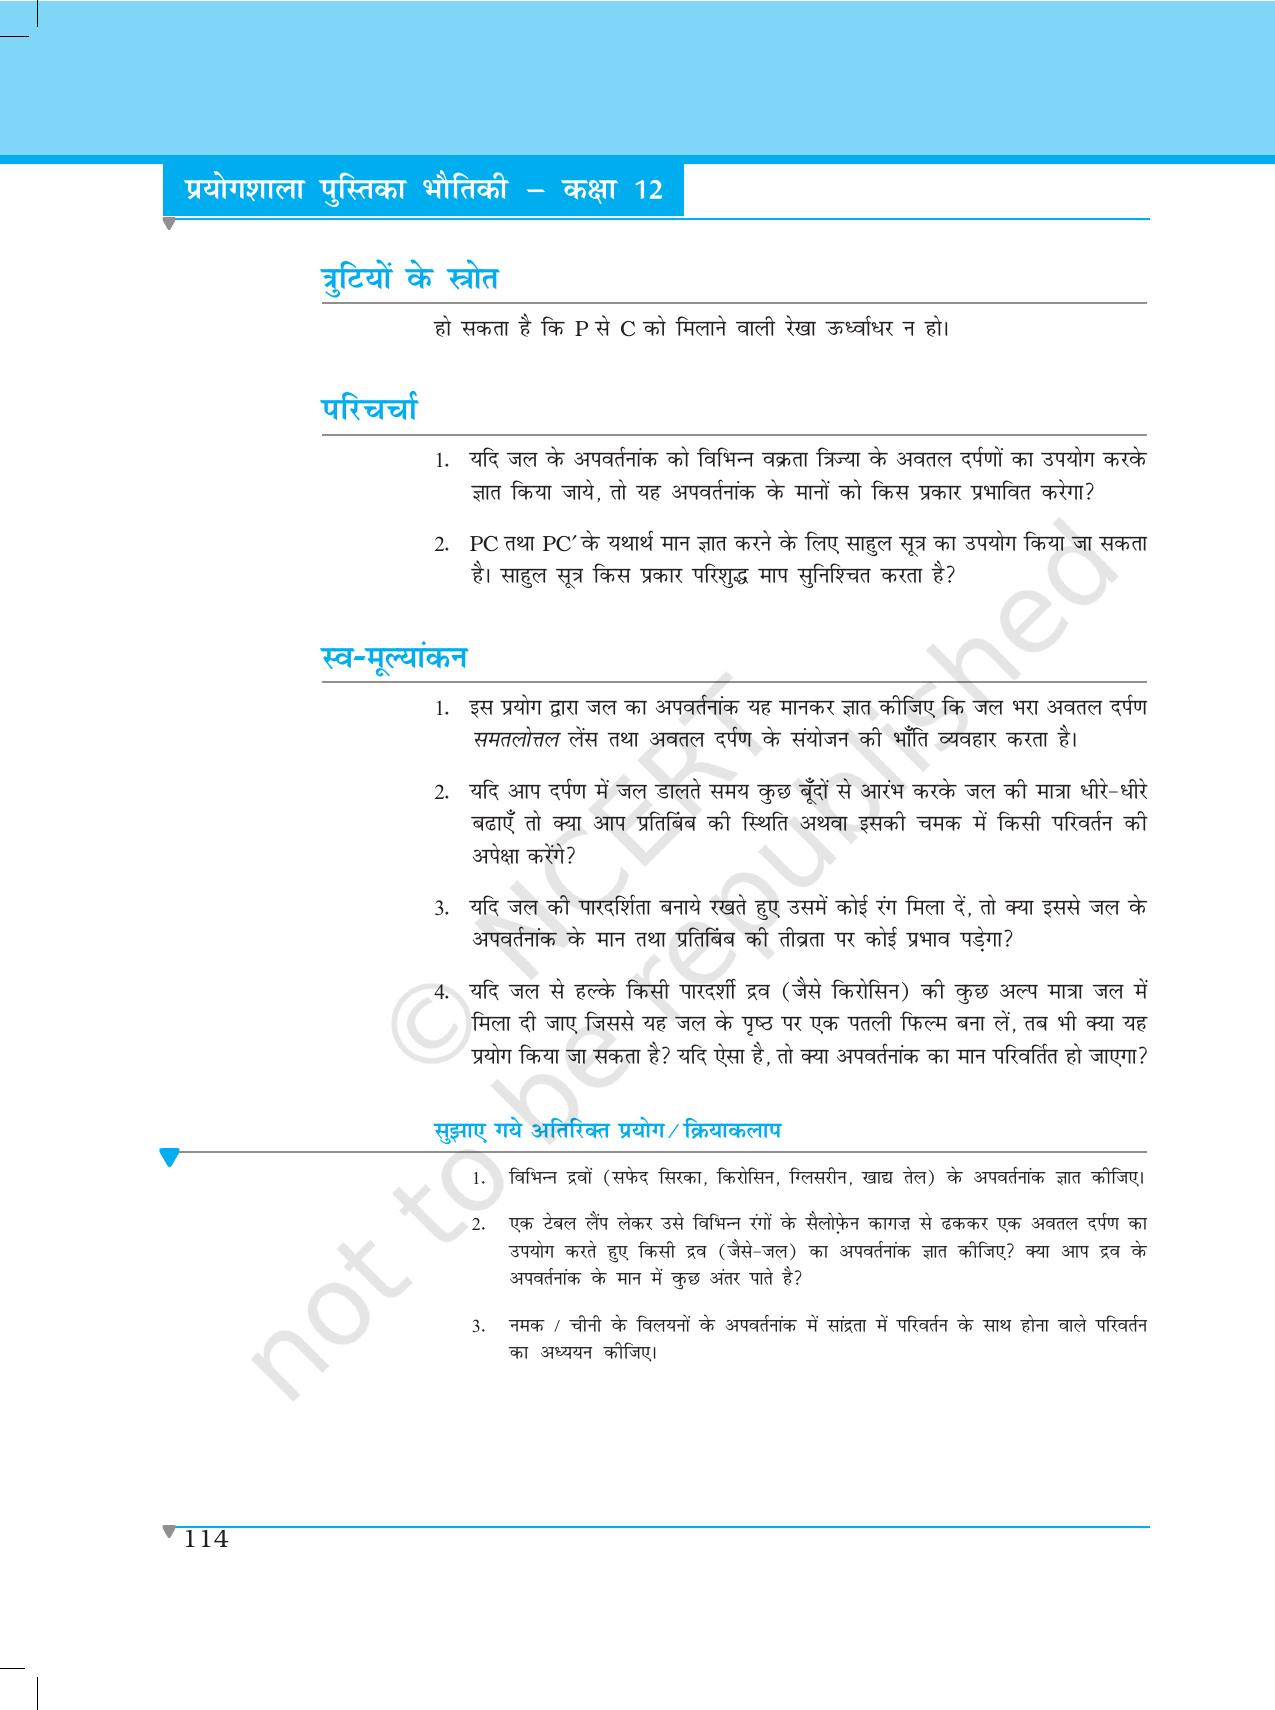 NCERT Laboratory Manuals for Class XII भौतिकी - प्रयोग (14 - 18) - Page 10